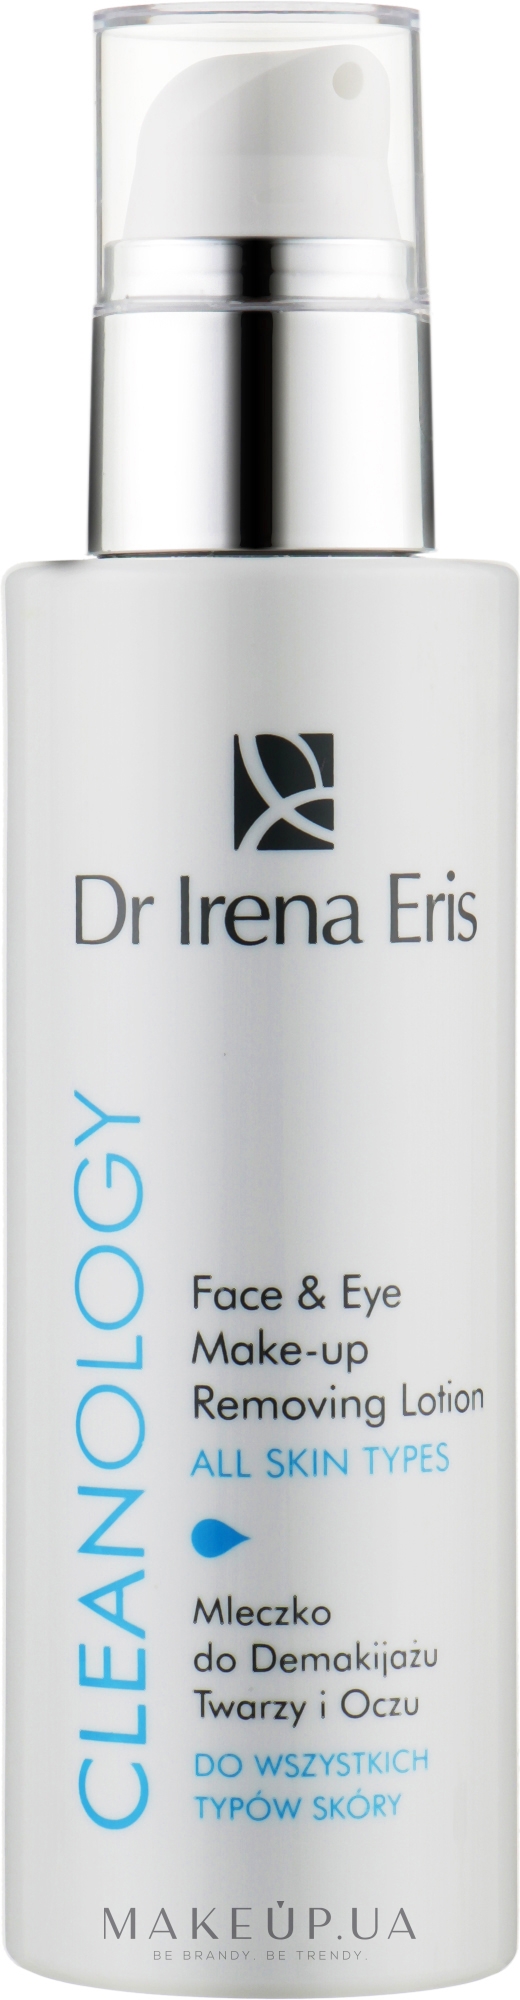 Молочко для демакияжа лица и глаз - Dr Irena Eris Cleanology Face & Eye make-up removing lotion — фото 200ml